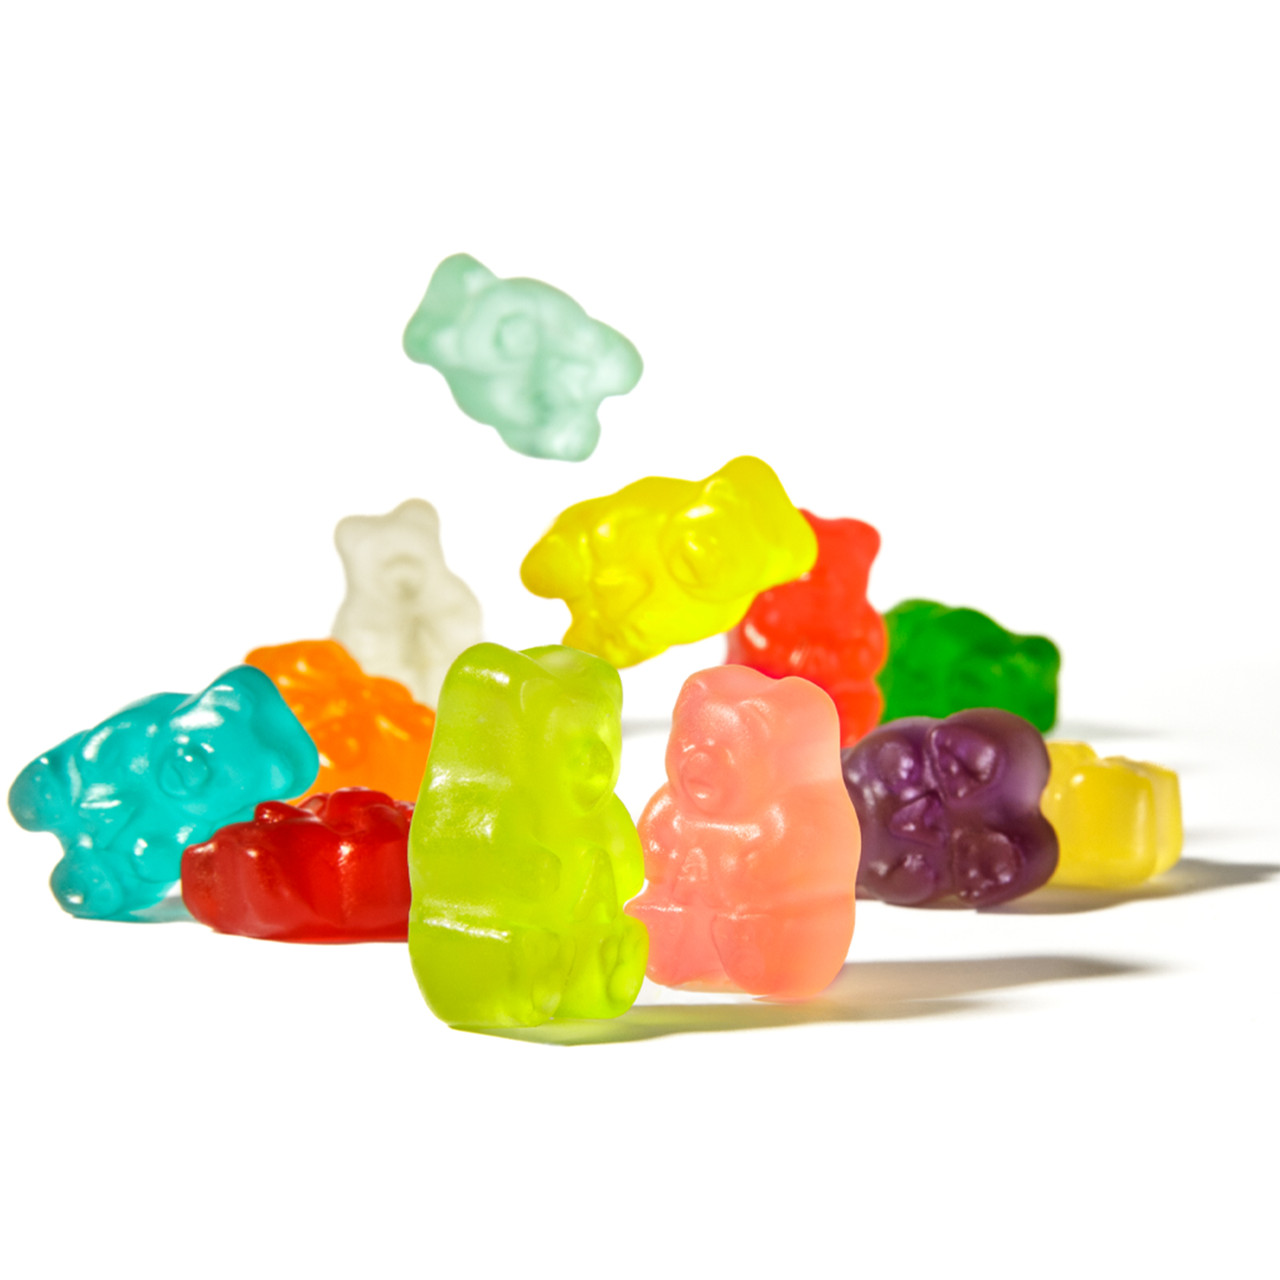 12 Flavor Gummi Bears, Best Gummi Bear Flavors